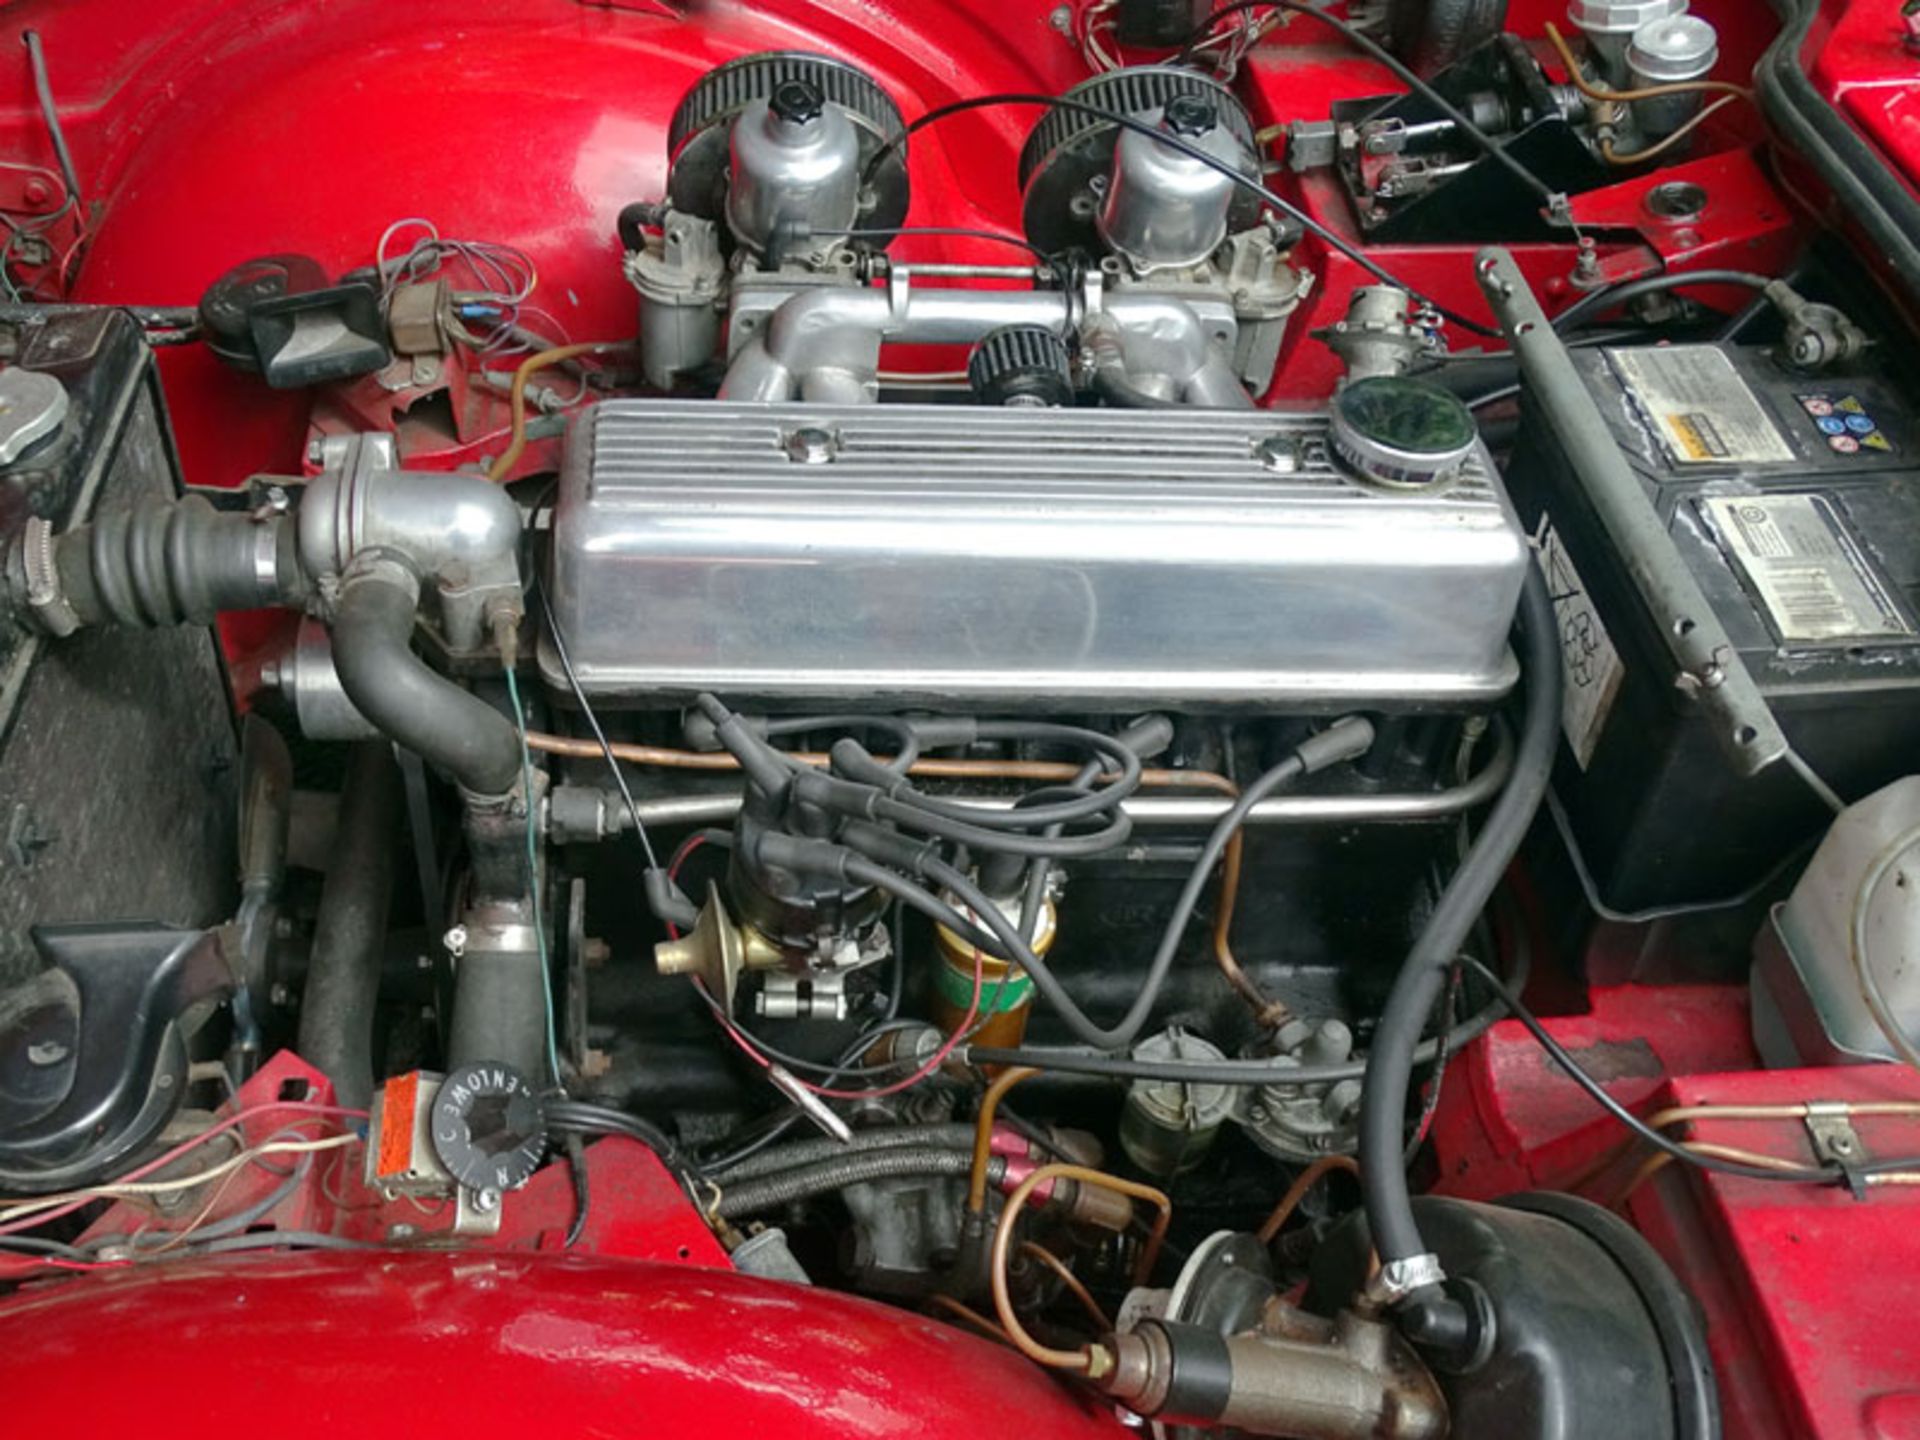 1965 Triumph TR4 - Image 8 of 9